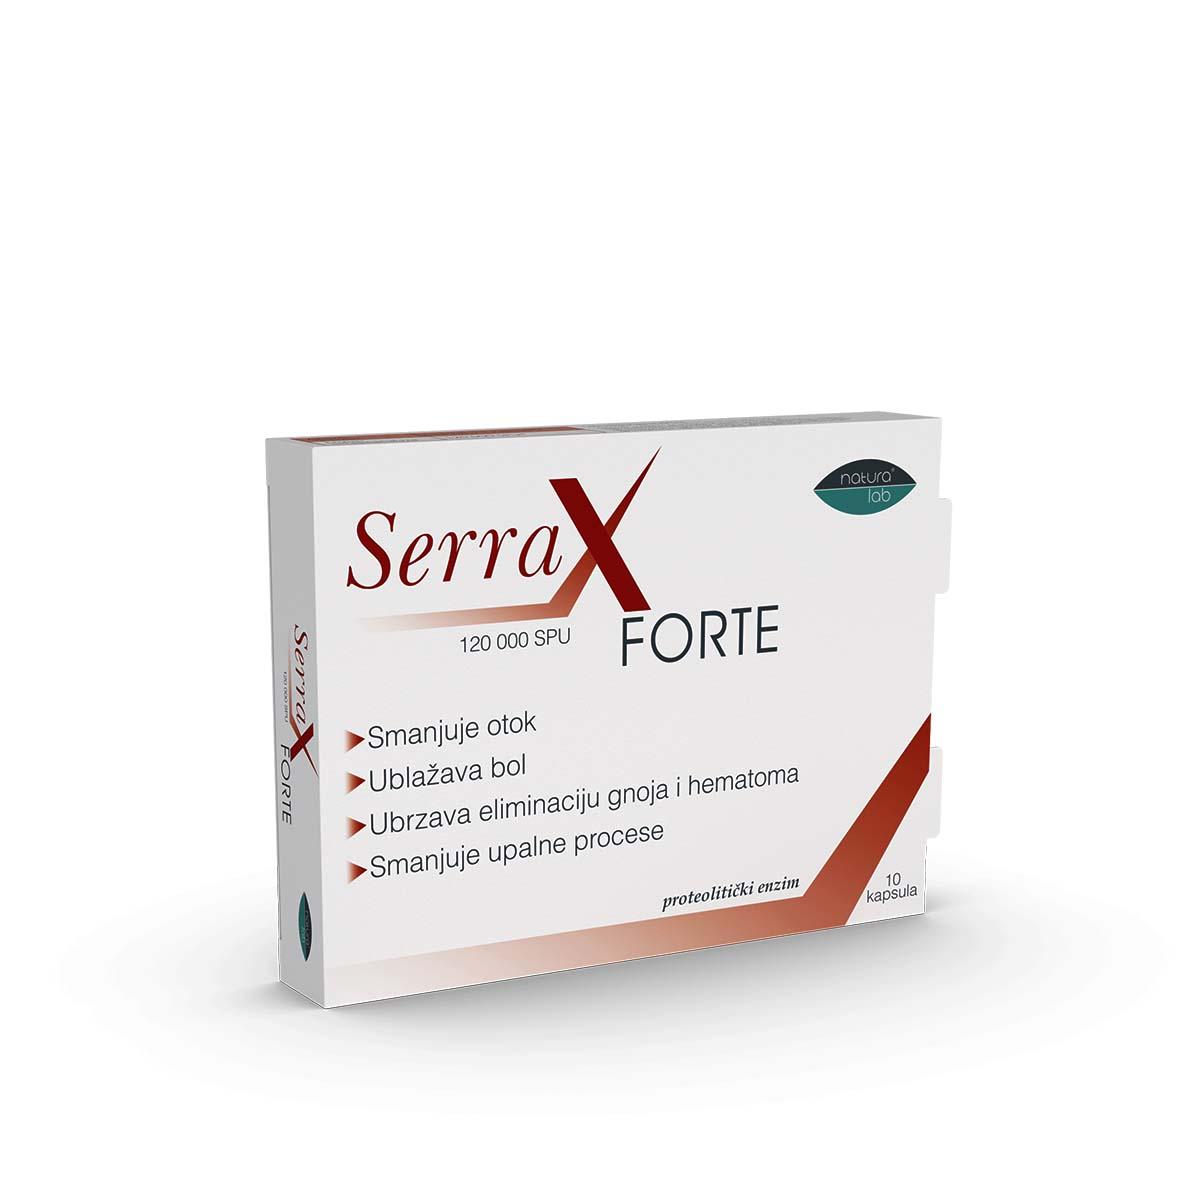 Serrax Forte 120000 SPU kapsule 10/1